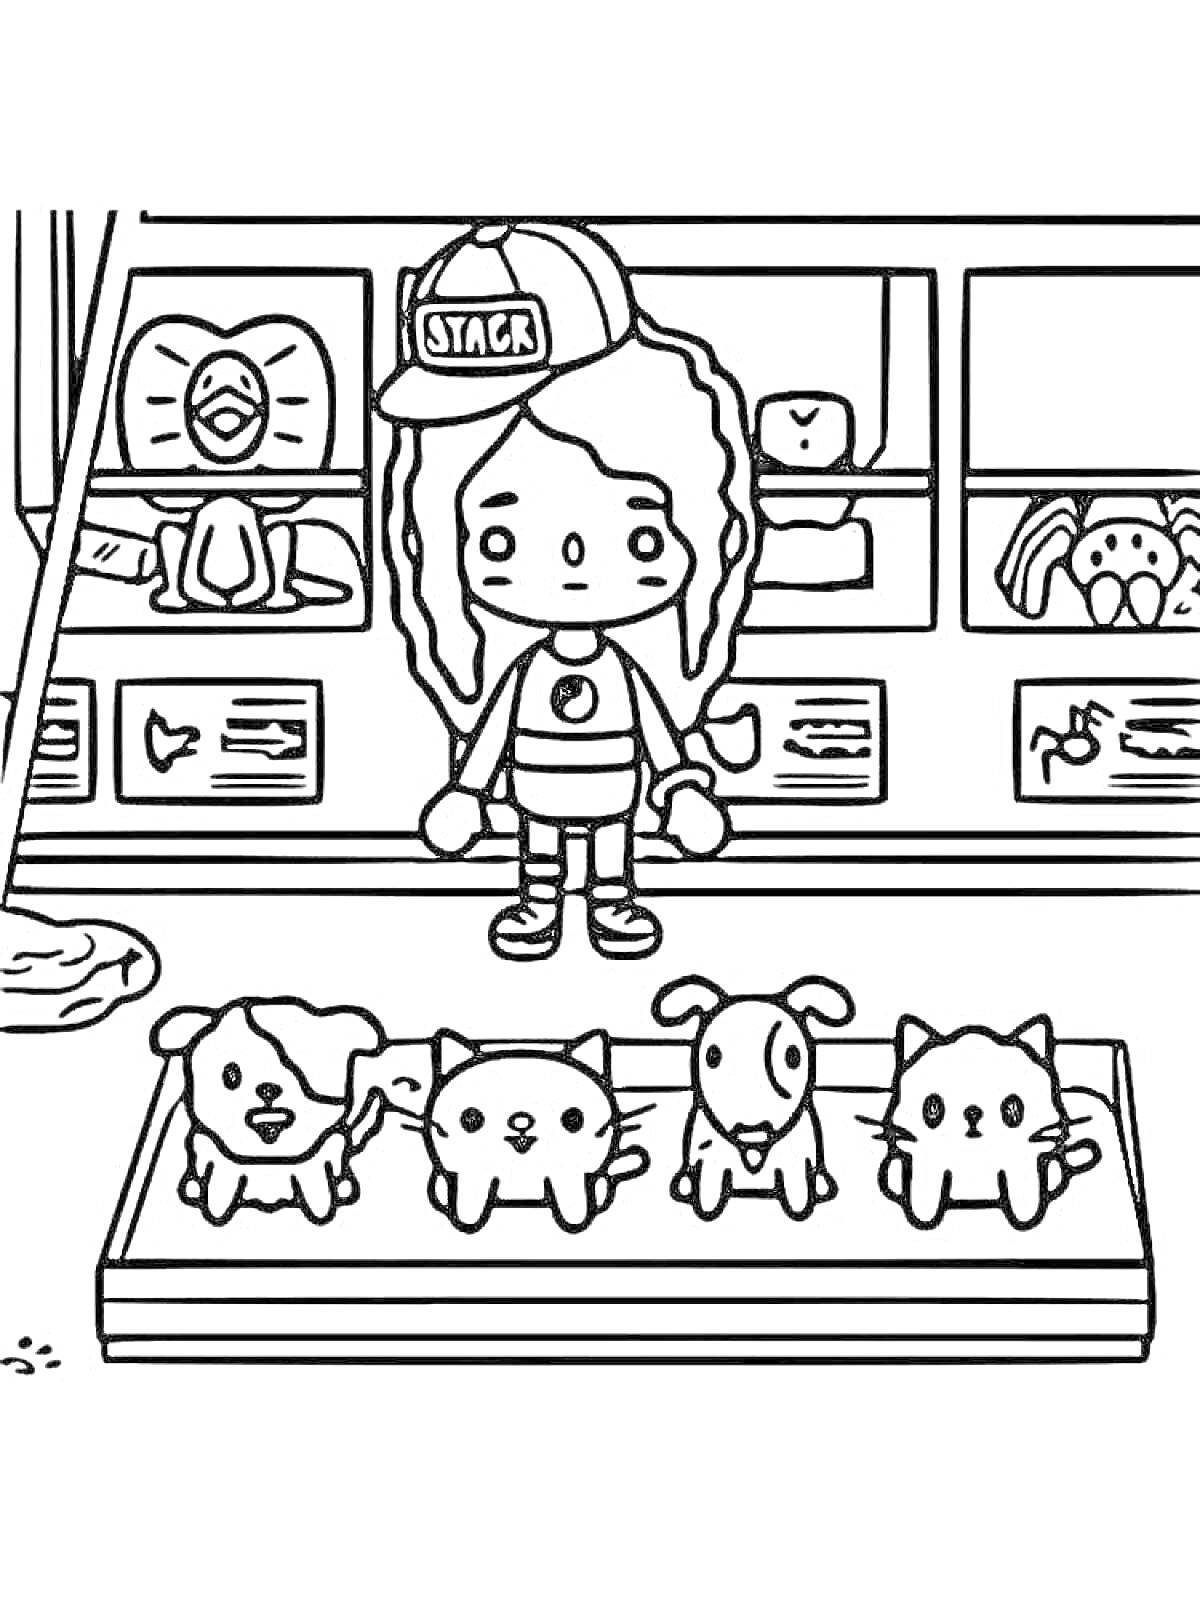 Девочка с косичками в кепке в зоомагазине, лежащие на прилавке два щенка и два котенка